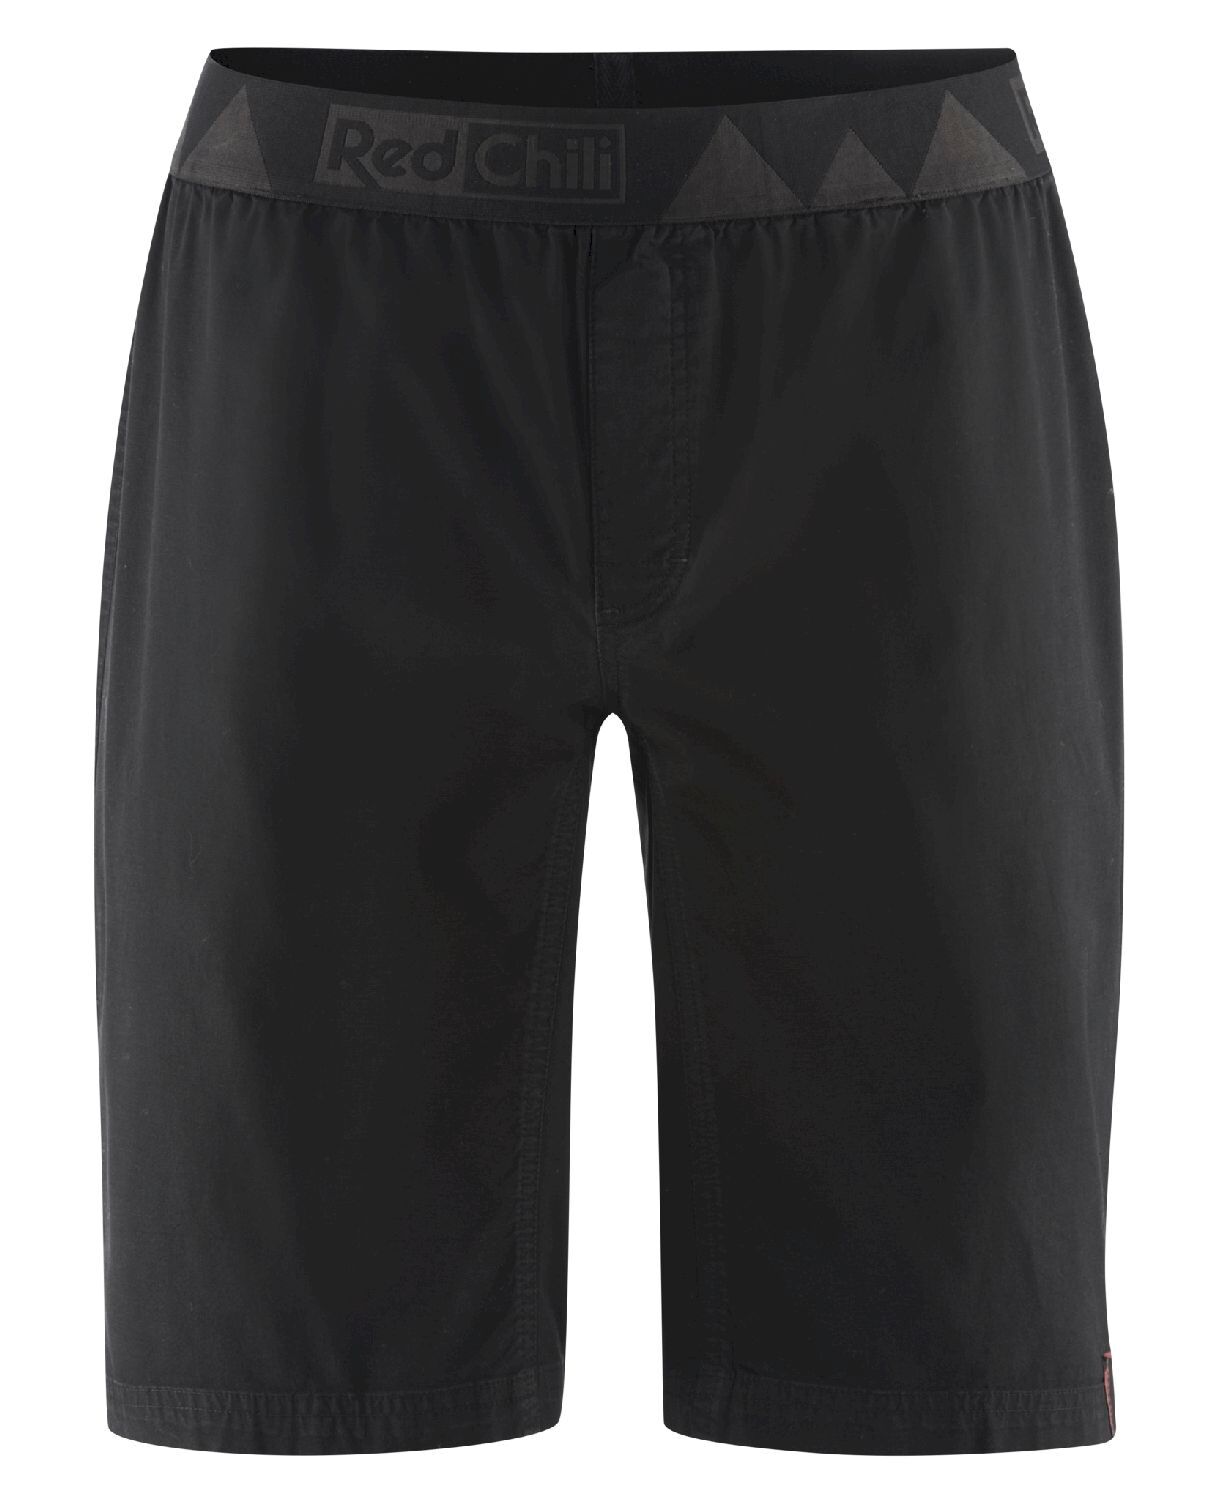 Red Chili Ogima Shorts - Pantalones cortos de escalada - Hombre